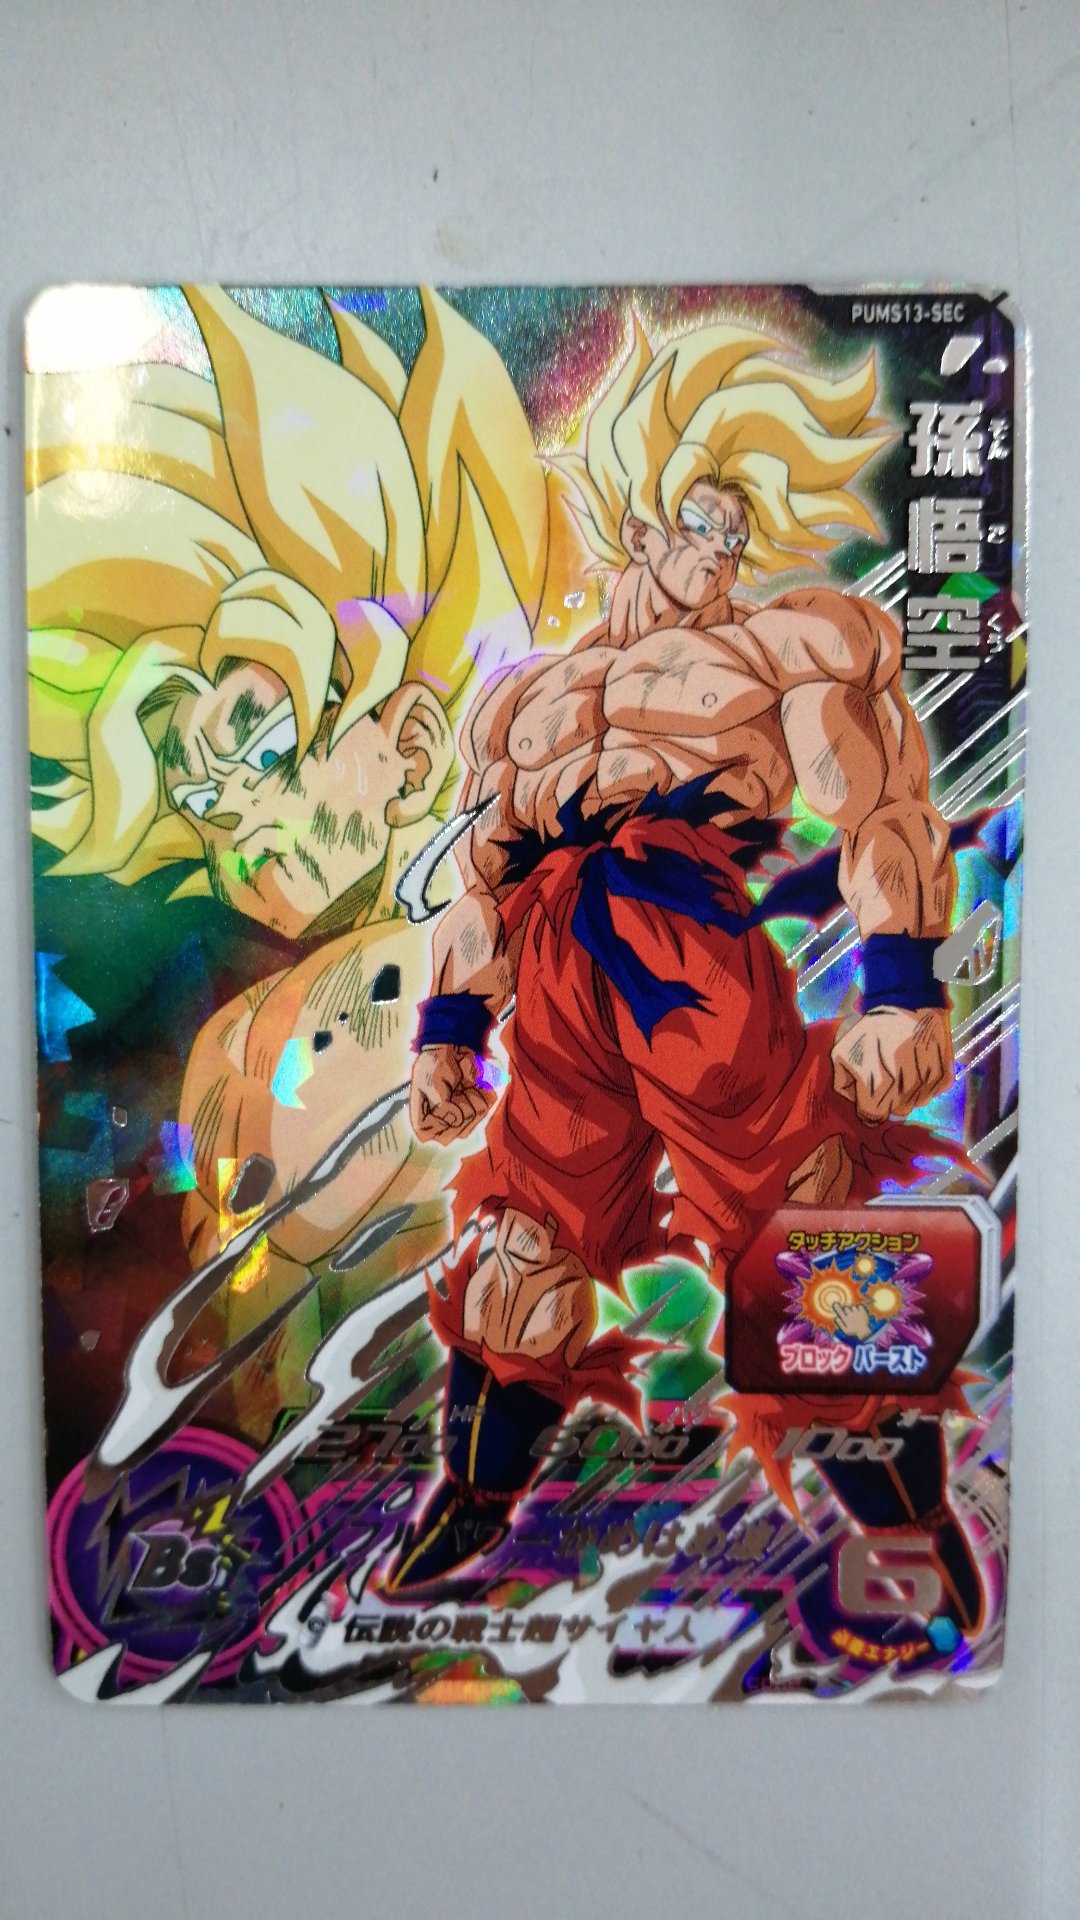 Buy Son Goku BANDAI PUMS13-SEC Arcade Card from Japan - Buy